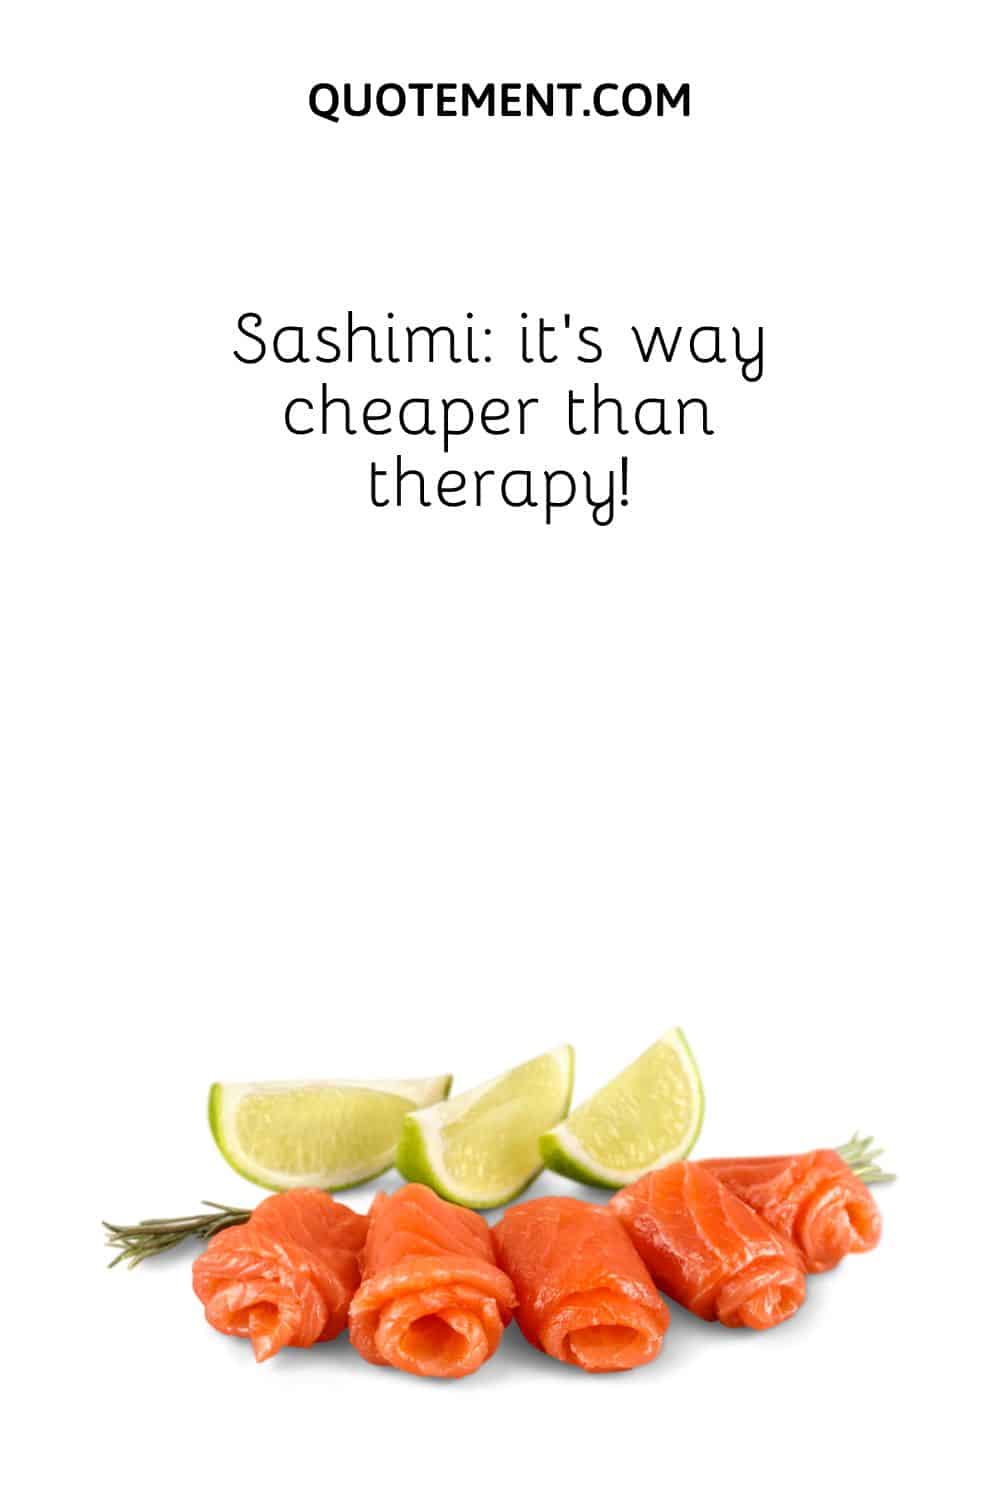 Sashimi it’s way cheaper than therapy!